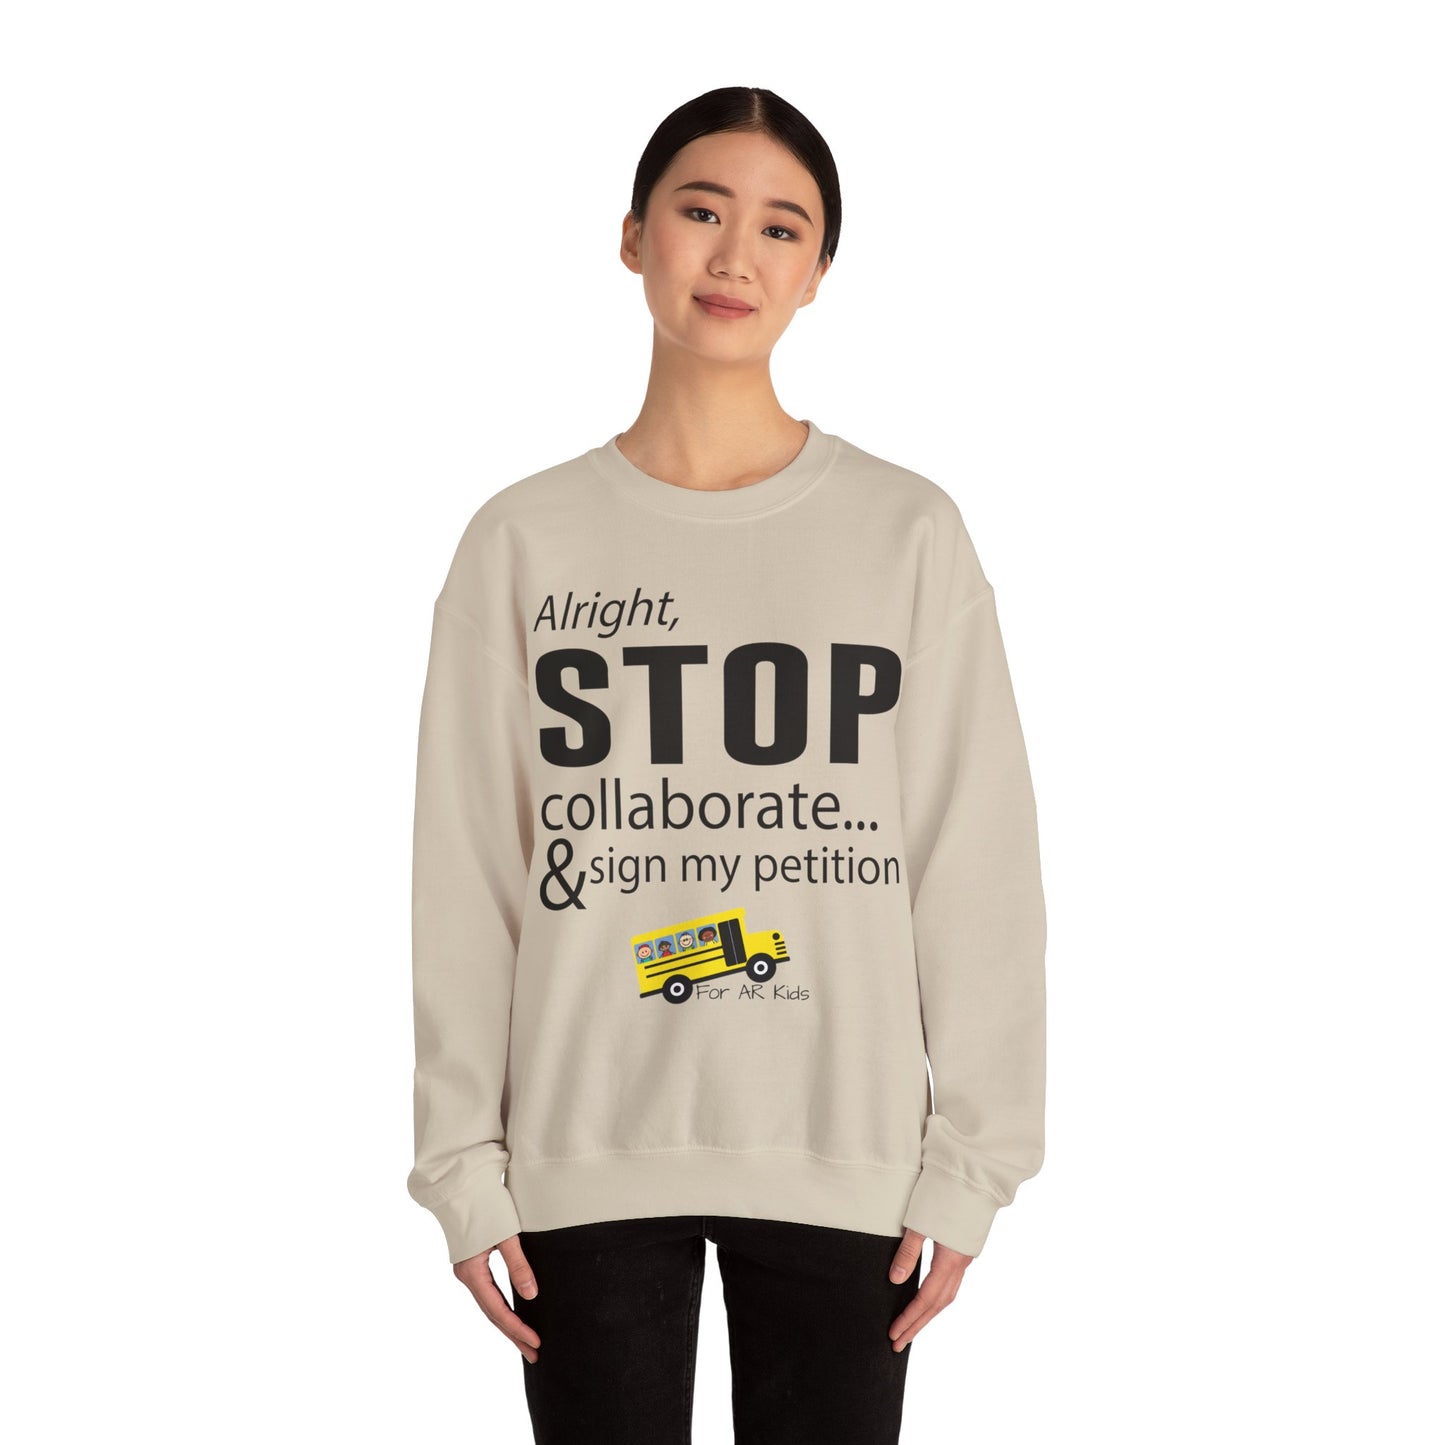 Alright Stop Collaborate and Sign My Petition Sweatshirt, AR Kids Sweatshirt, School Sweater